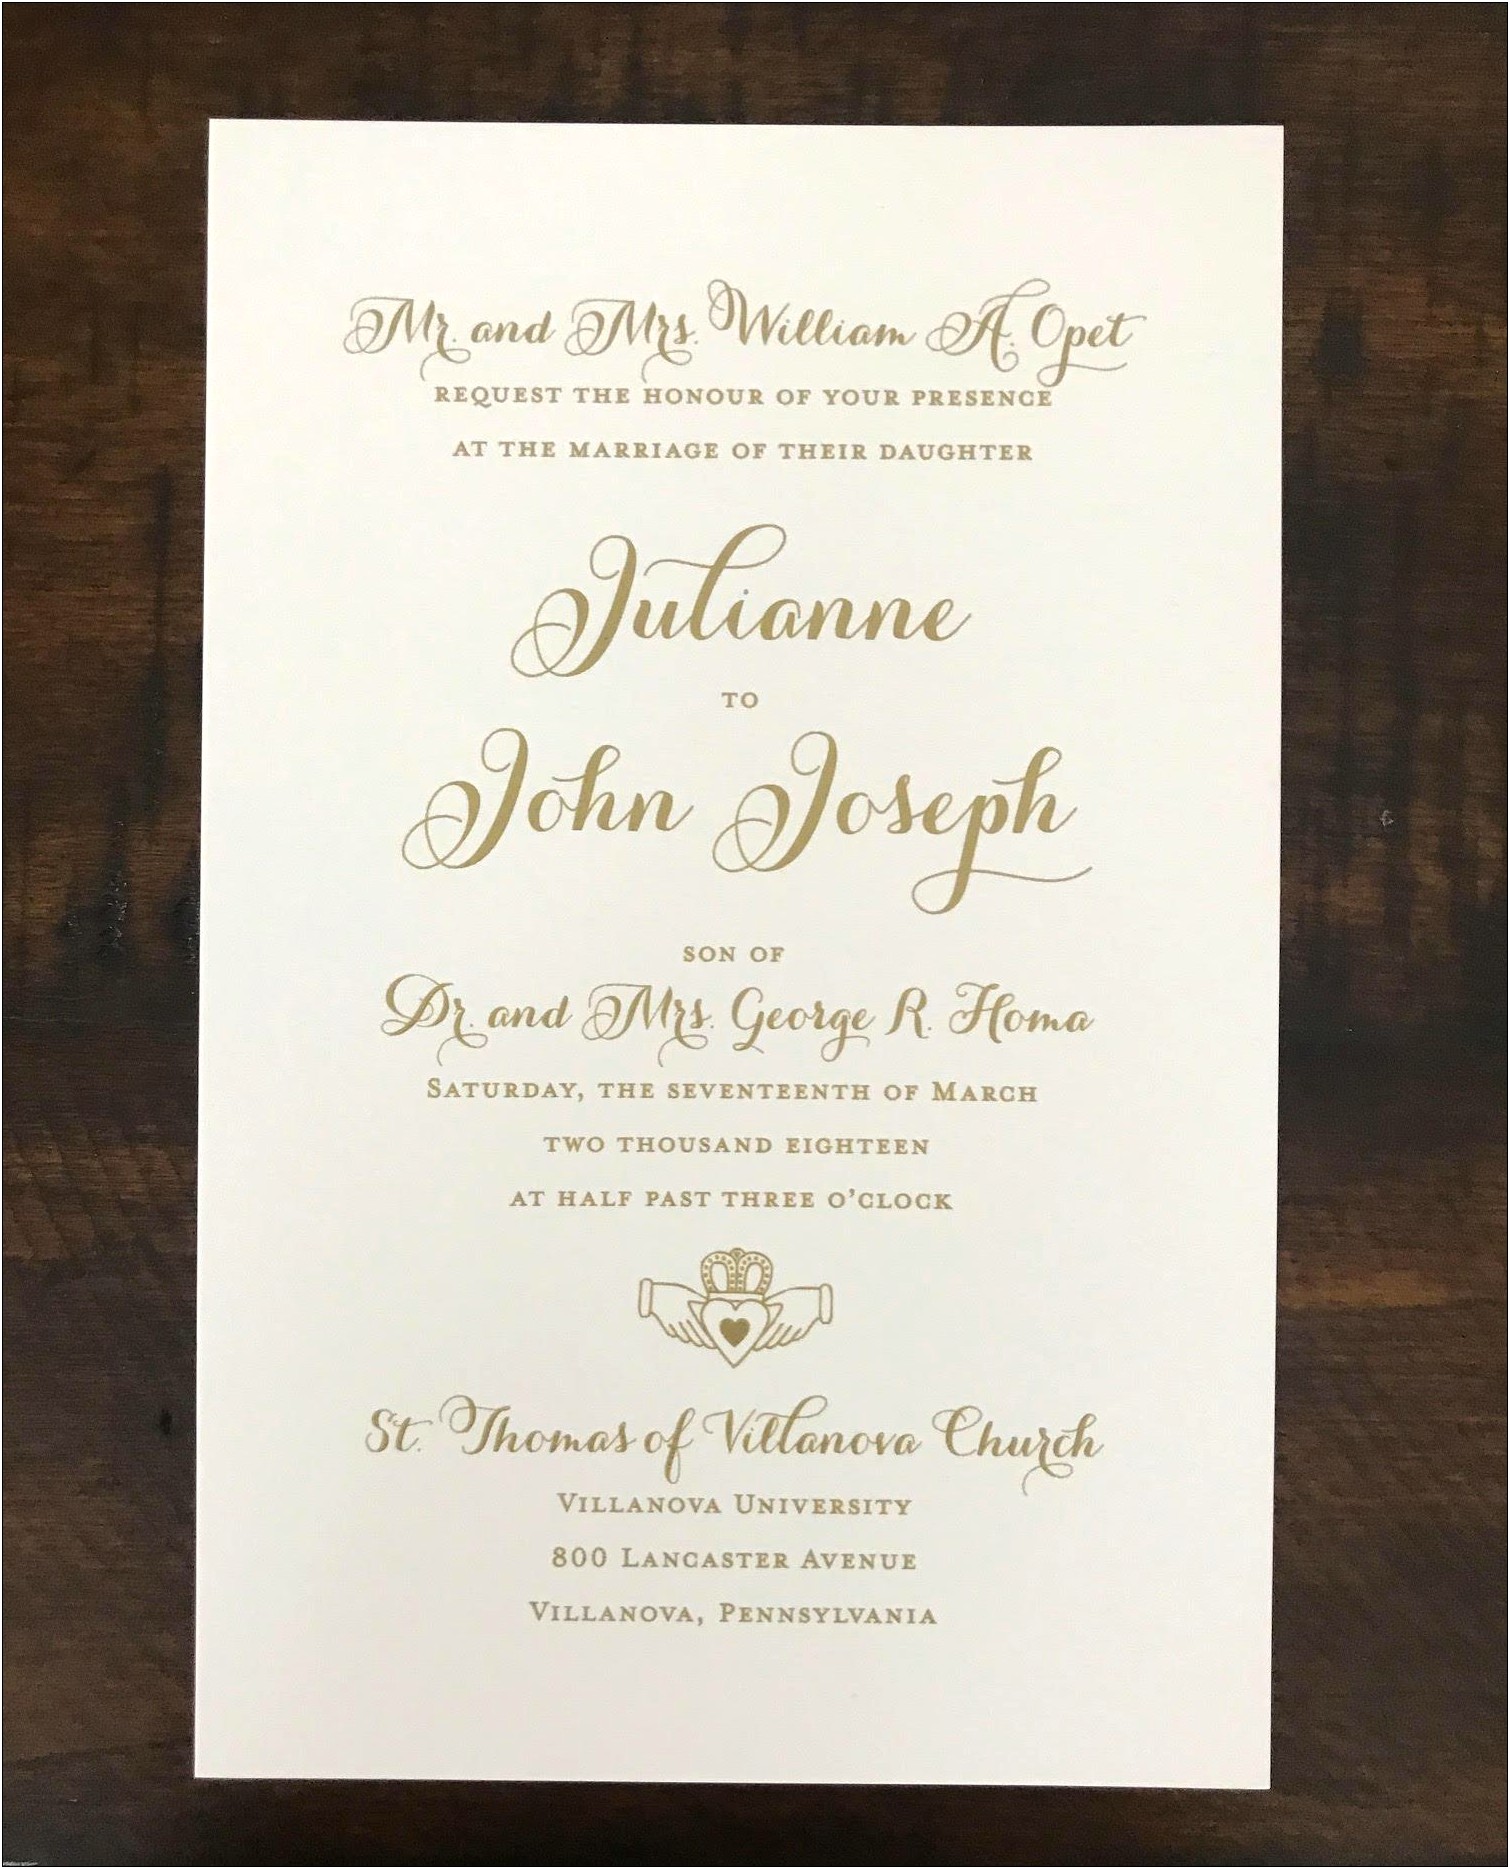 Do You Use Full Names On Wedding Invitations